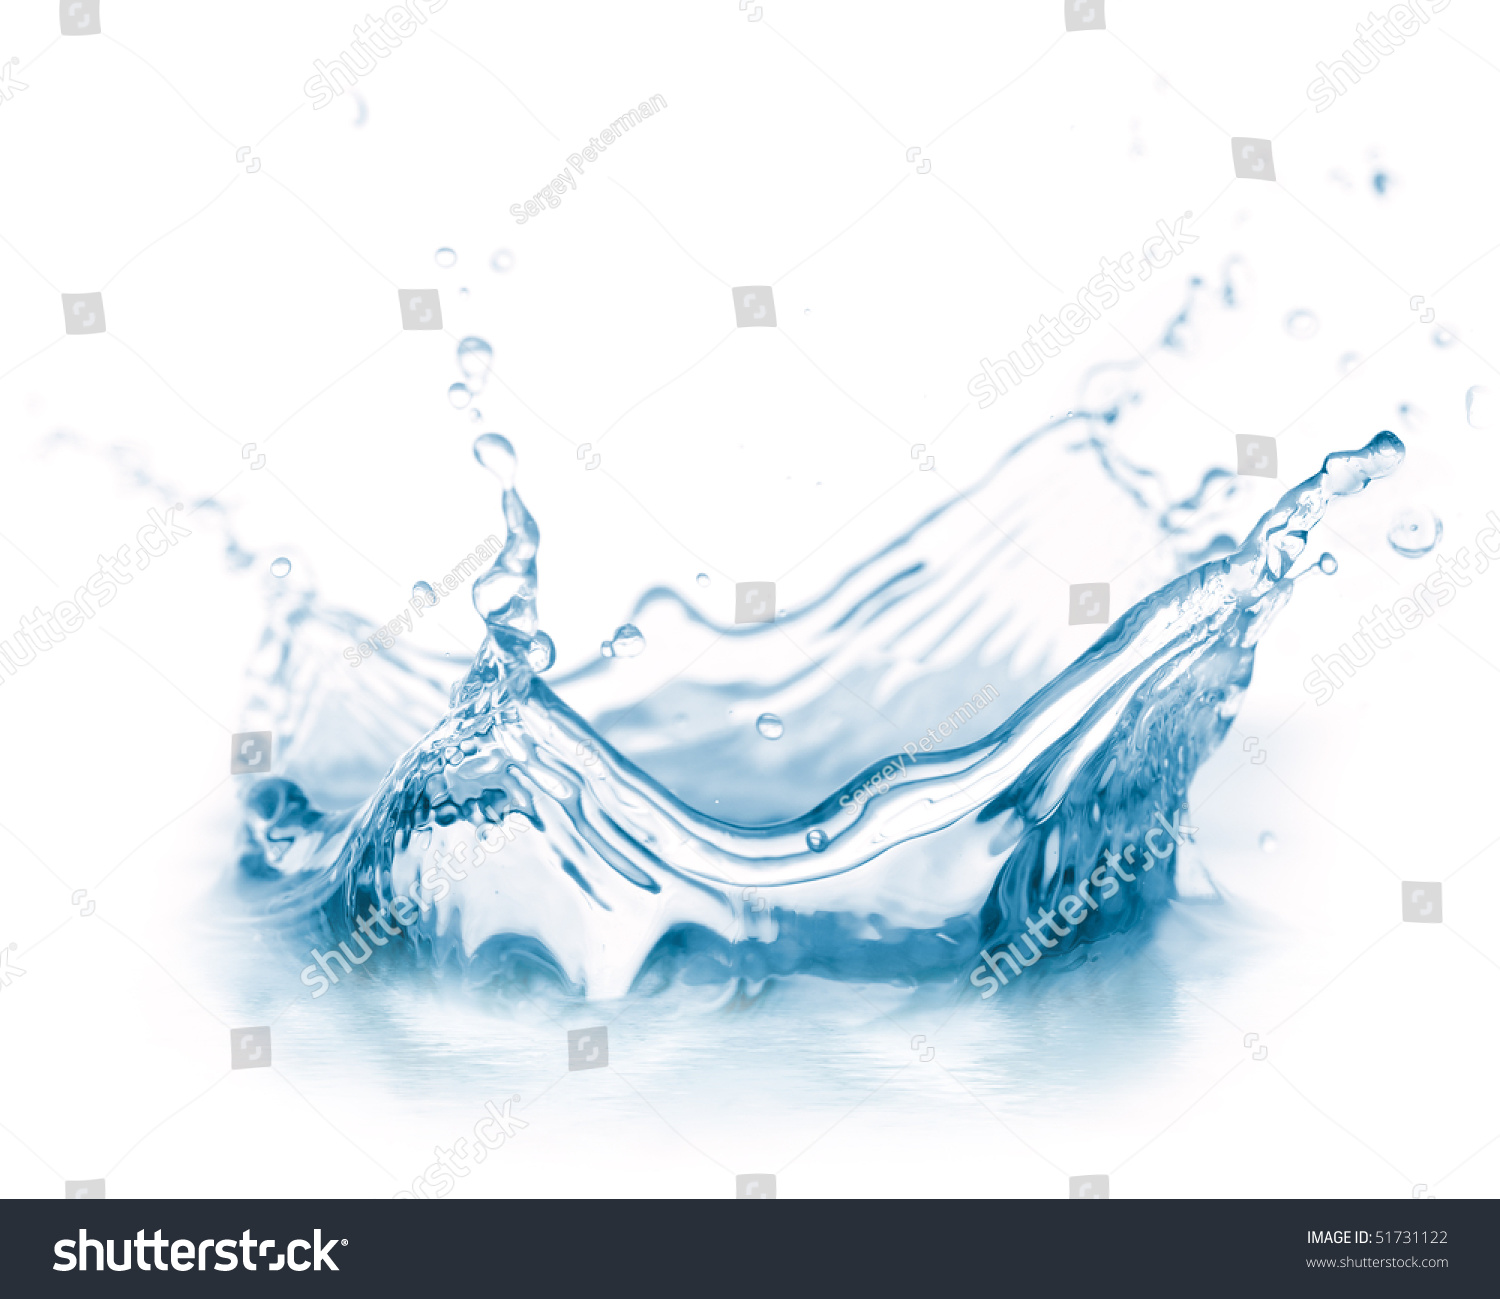 water splash isolated on white #51731122